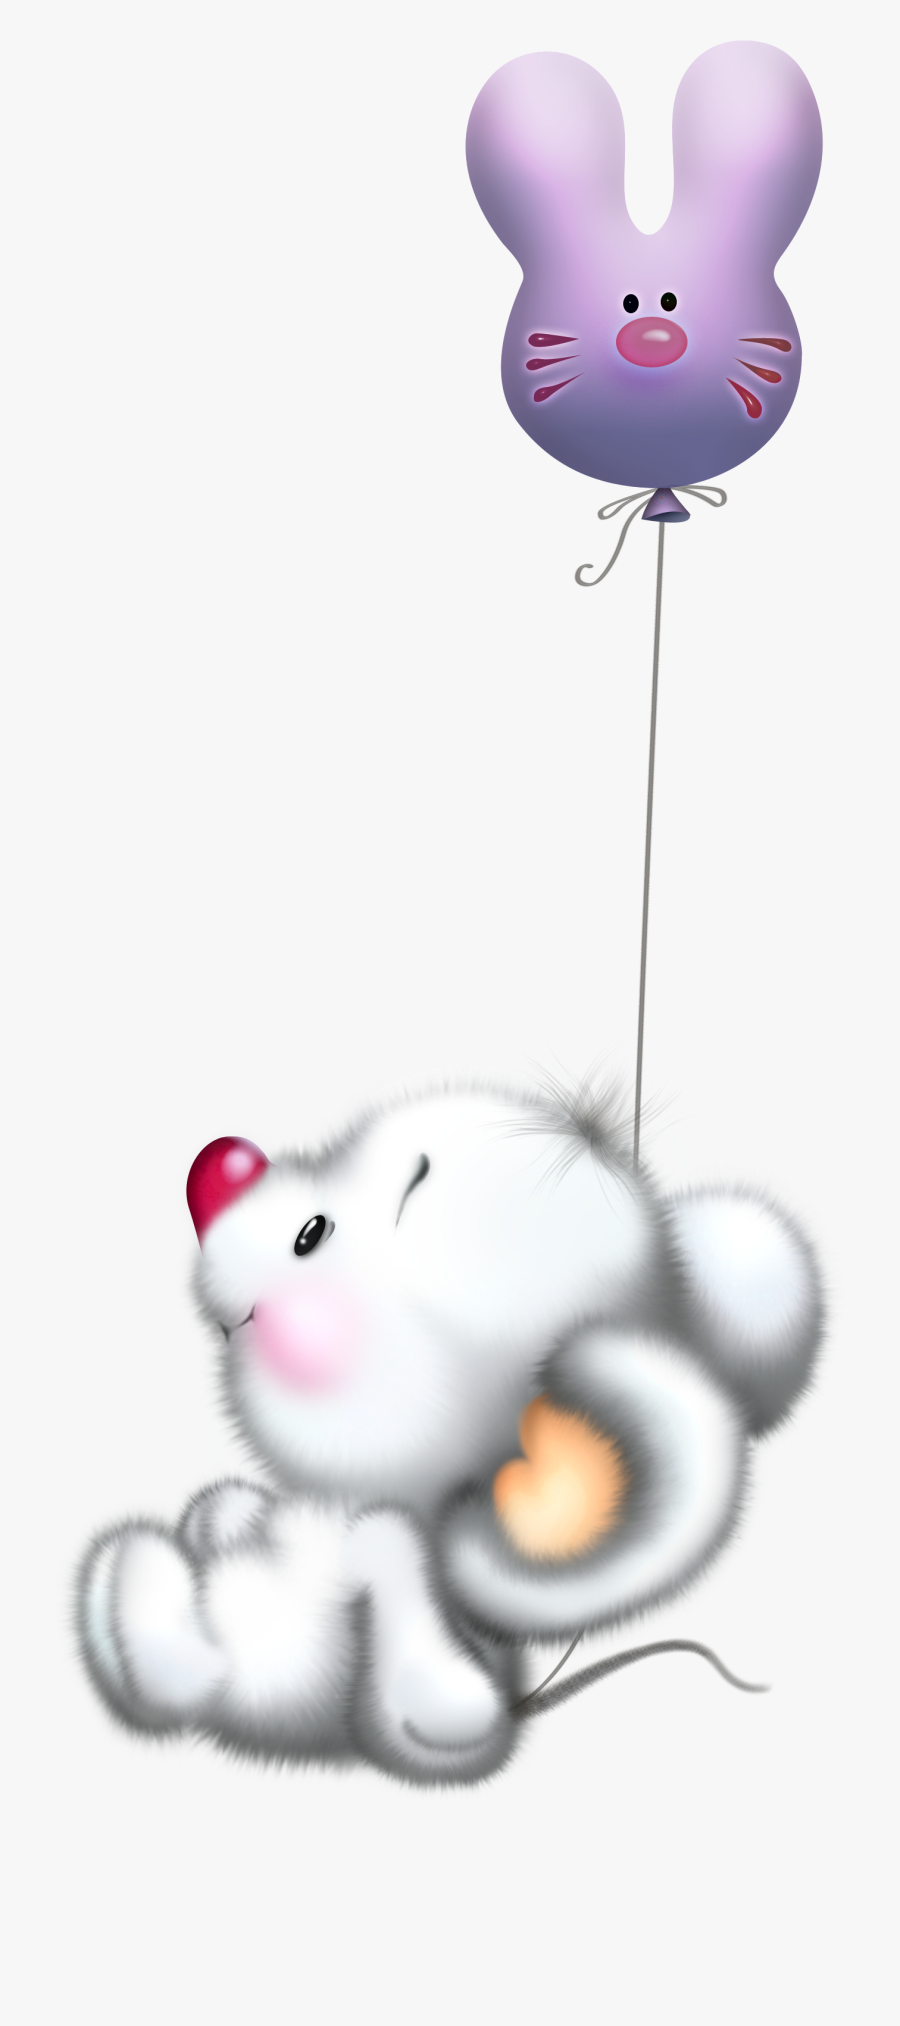 February Clipart Cute Button - Cute Mouse Pictures Cartoon, Transparent Clipart